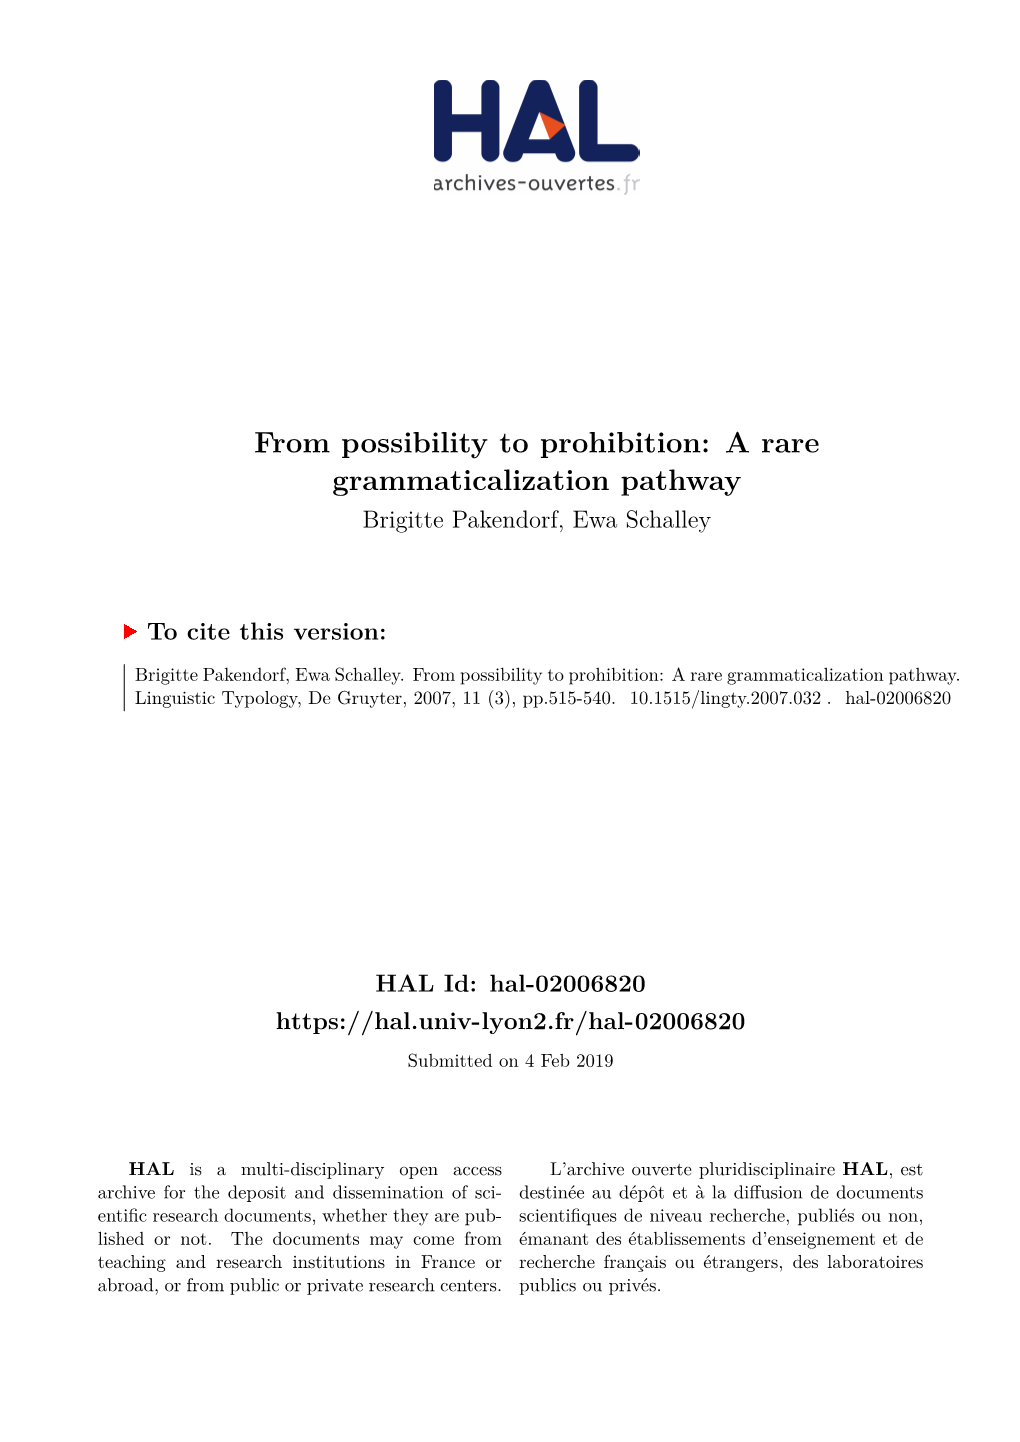 From Possibility to Prohibition: a Rare Grammaticalization Pathway Brigitte Pakendorf, Ewa Schalley